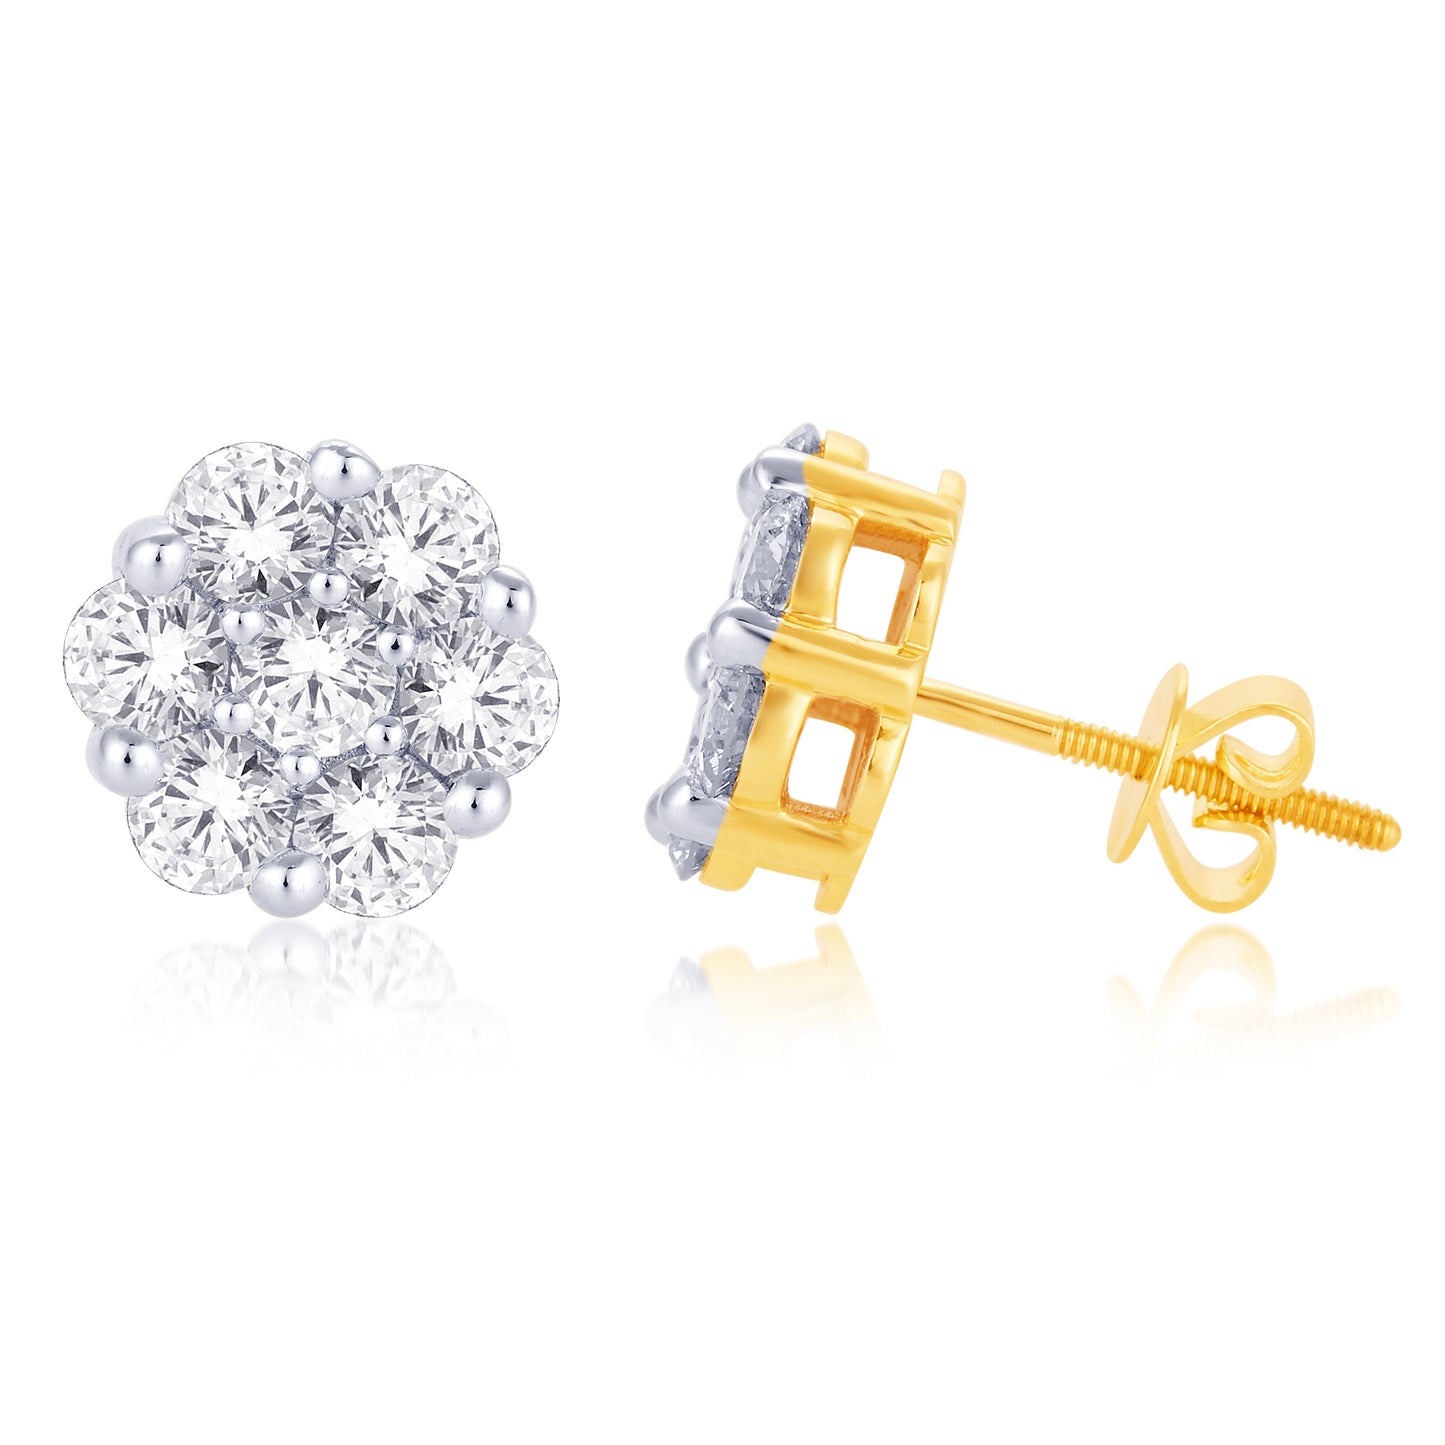 10 Karat Yellow Gold 0.50 Carat Diamond Flower Earrings-0125666-YG